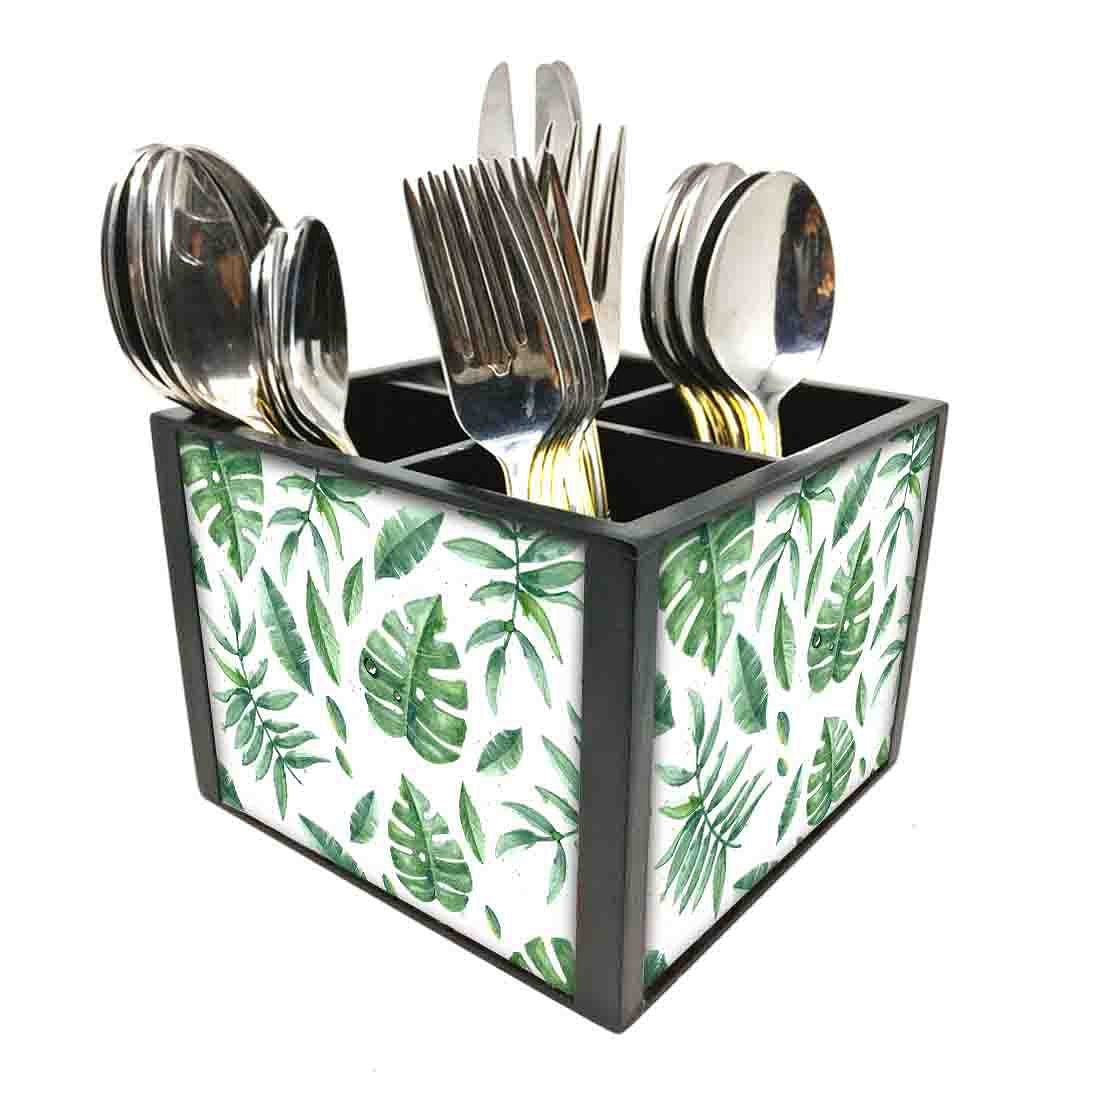 Cutlery Holder for Kitchen Silverware Caddy Organizer - Leaves Nutcase